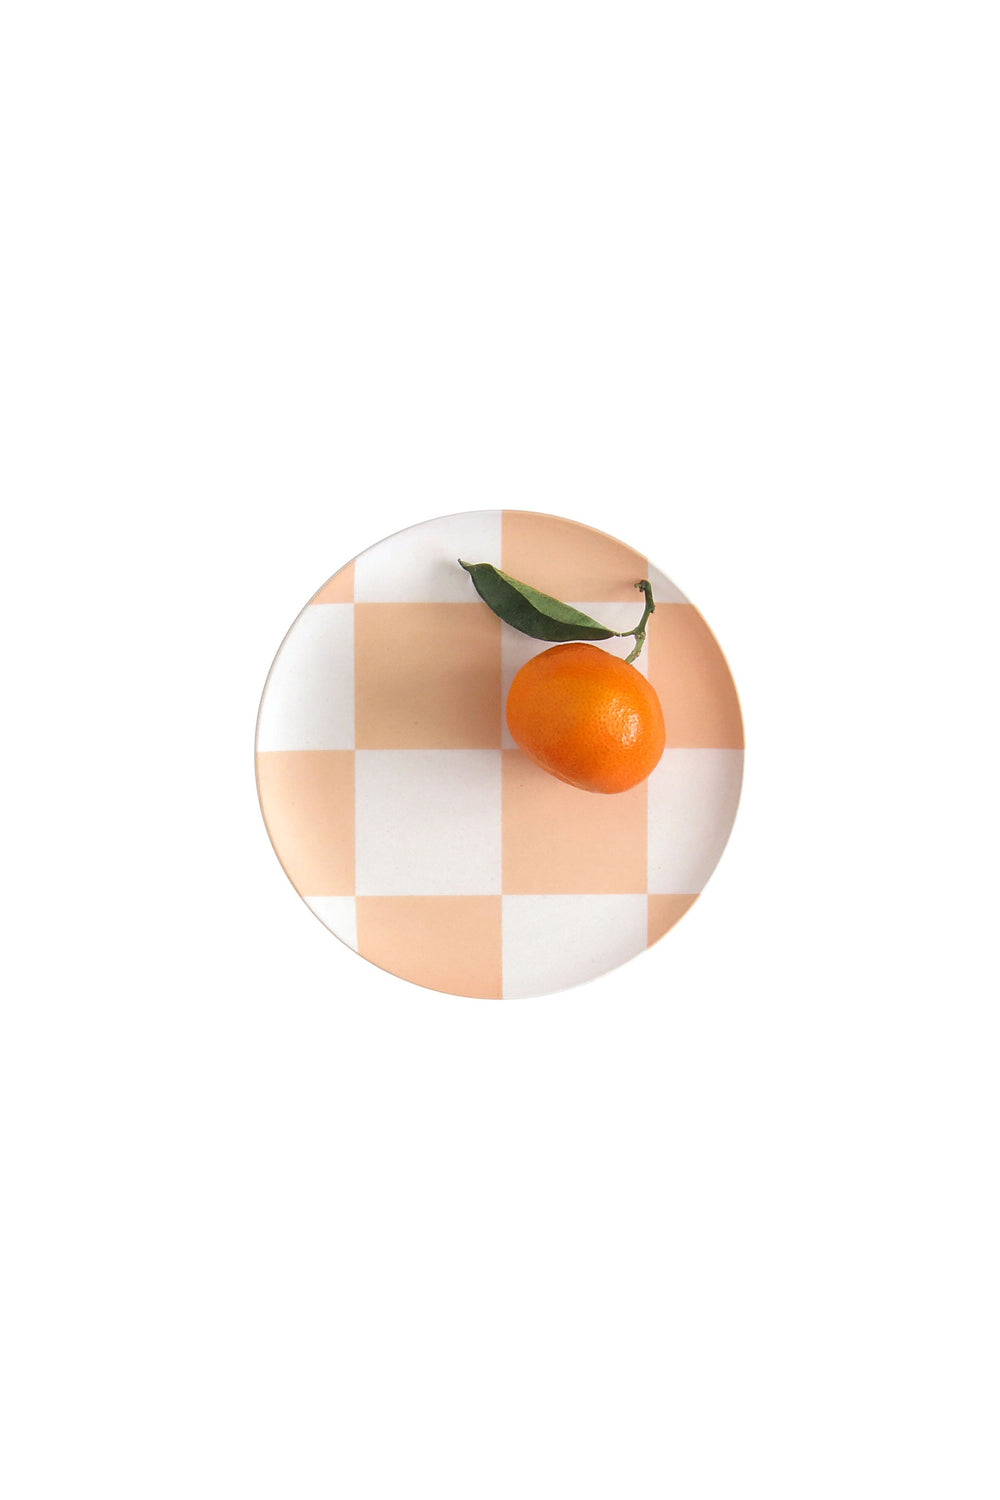 Peach Check Side Plate Set